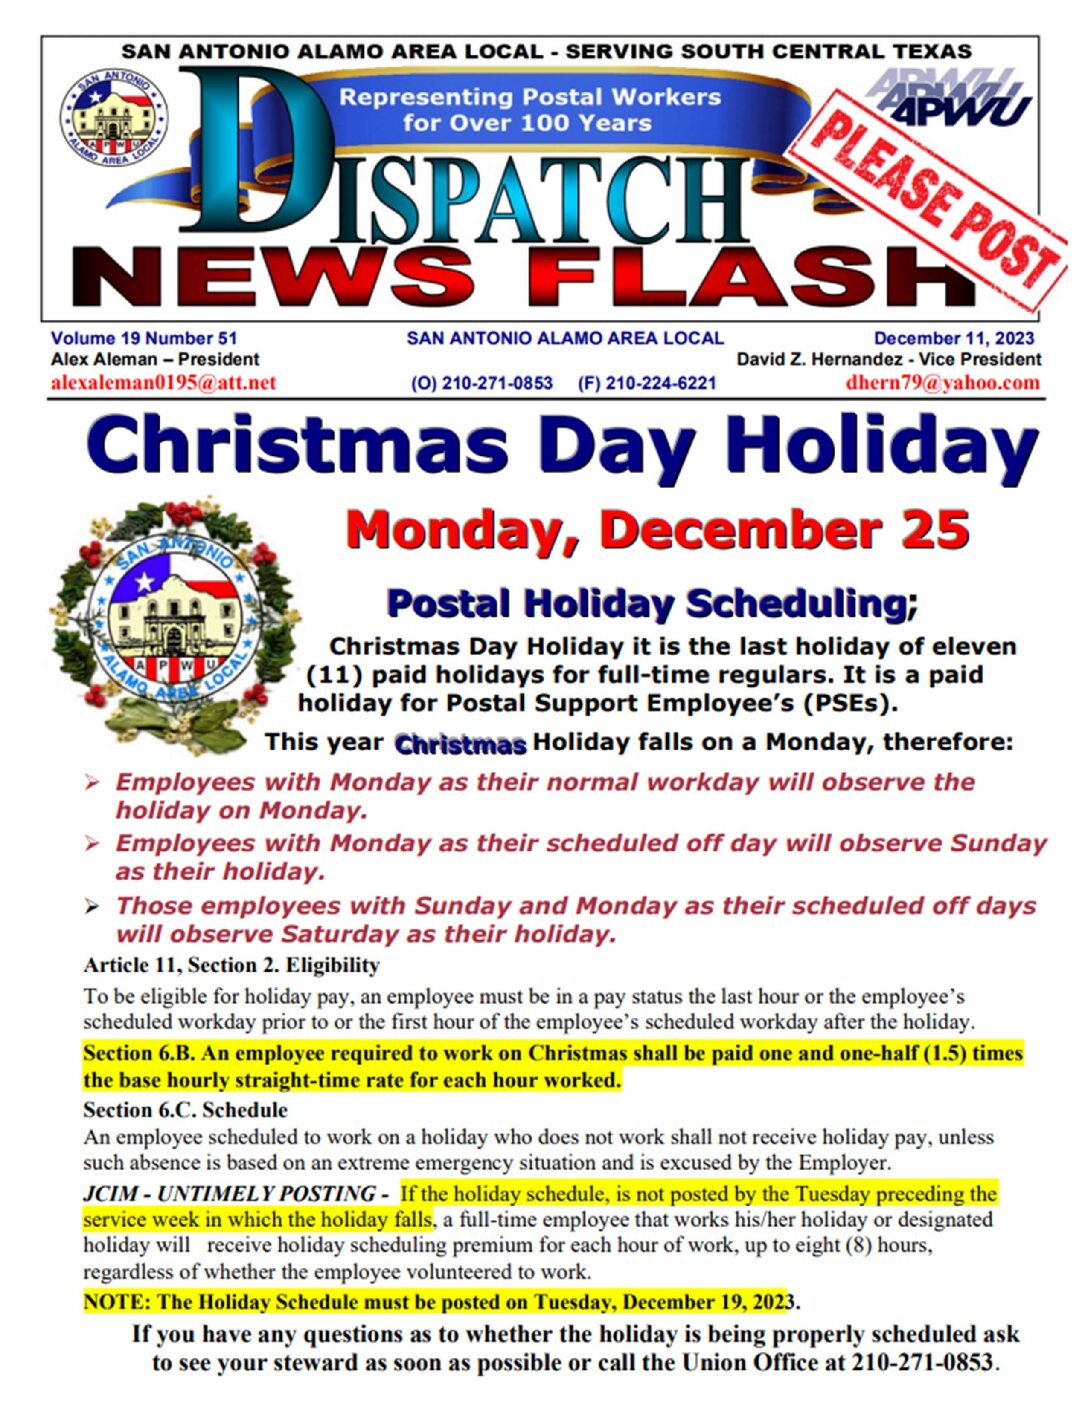 NewsFlash 19-51 Christmas Holiday Scheduling - 